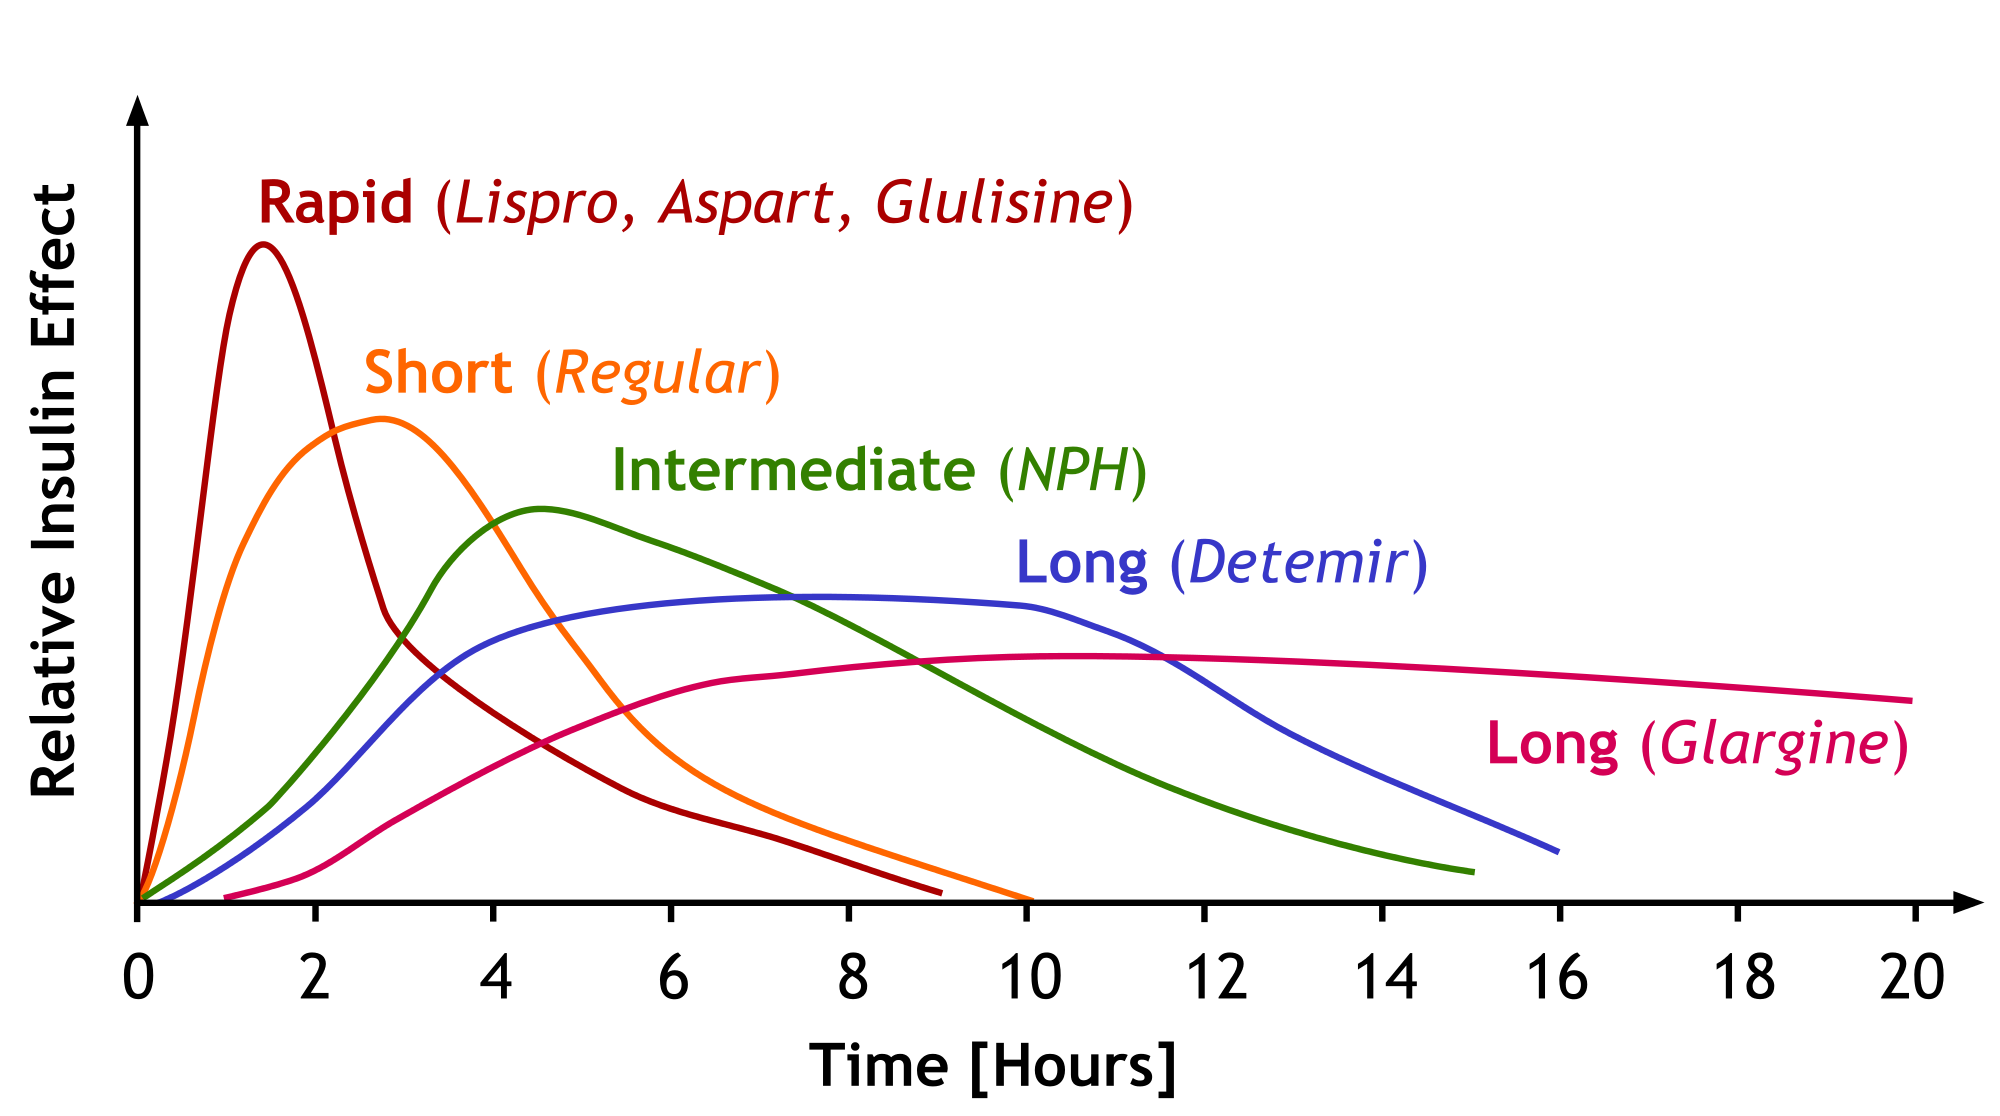 Insulin Time Chart